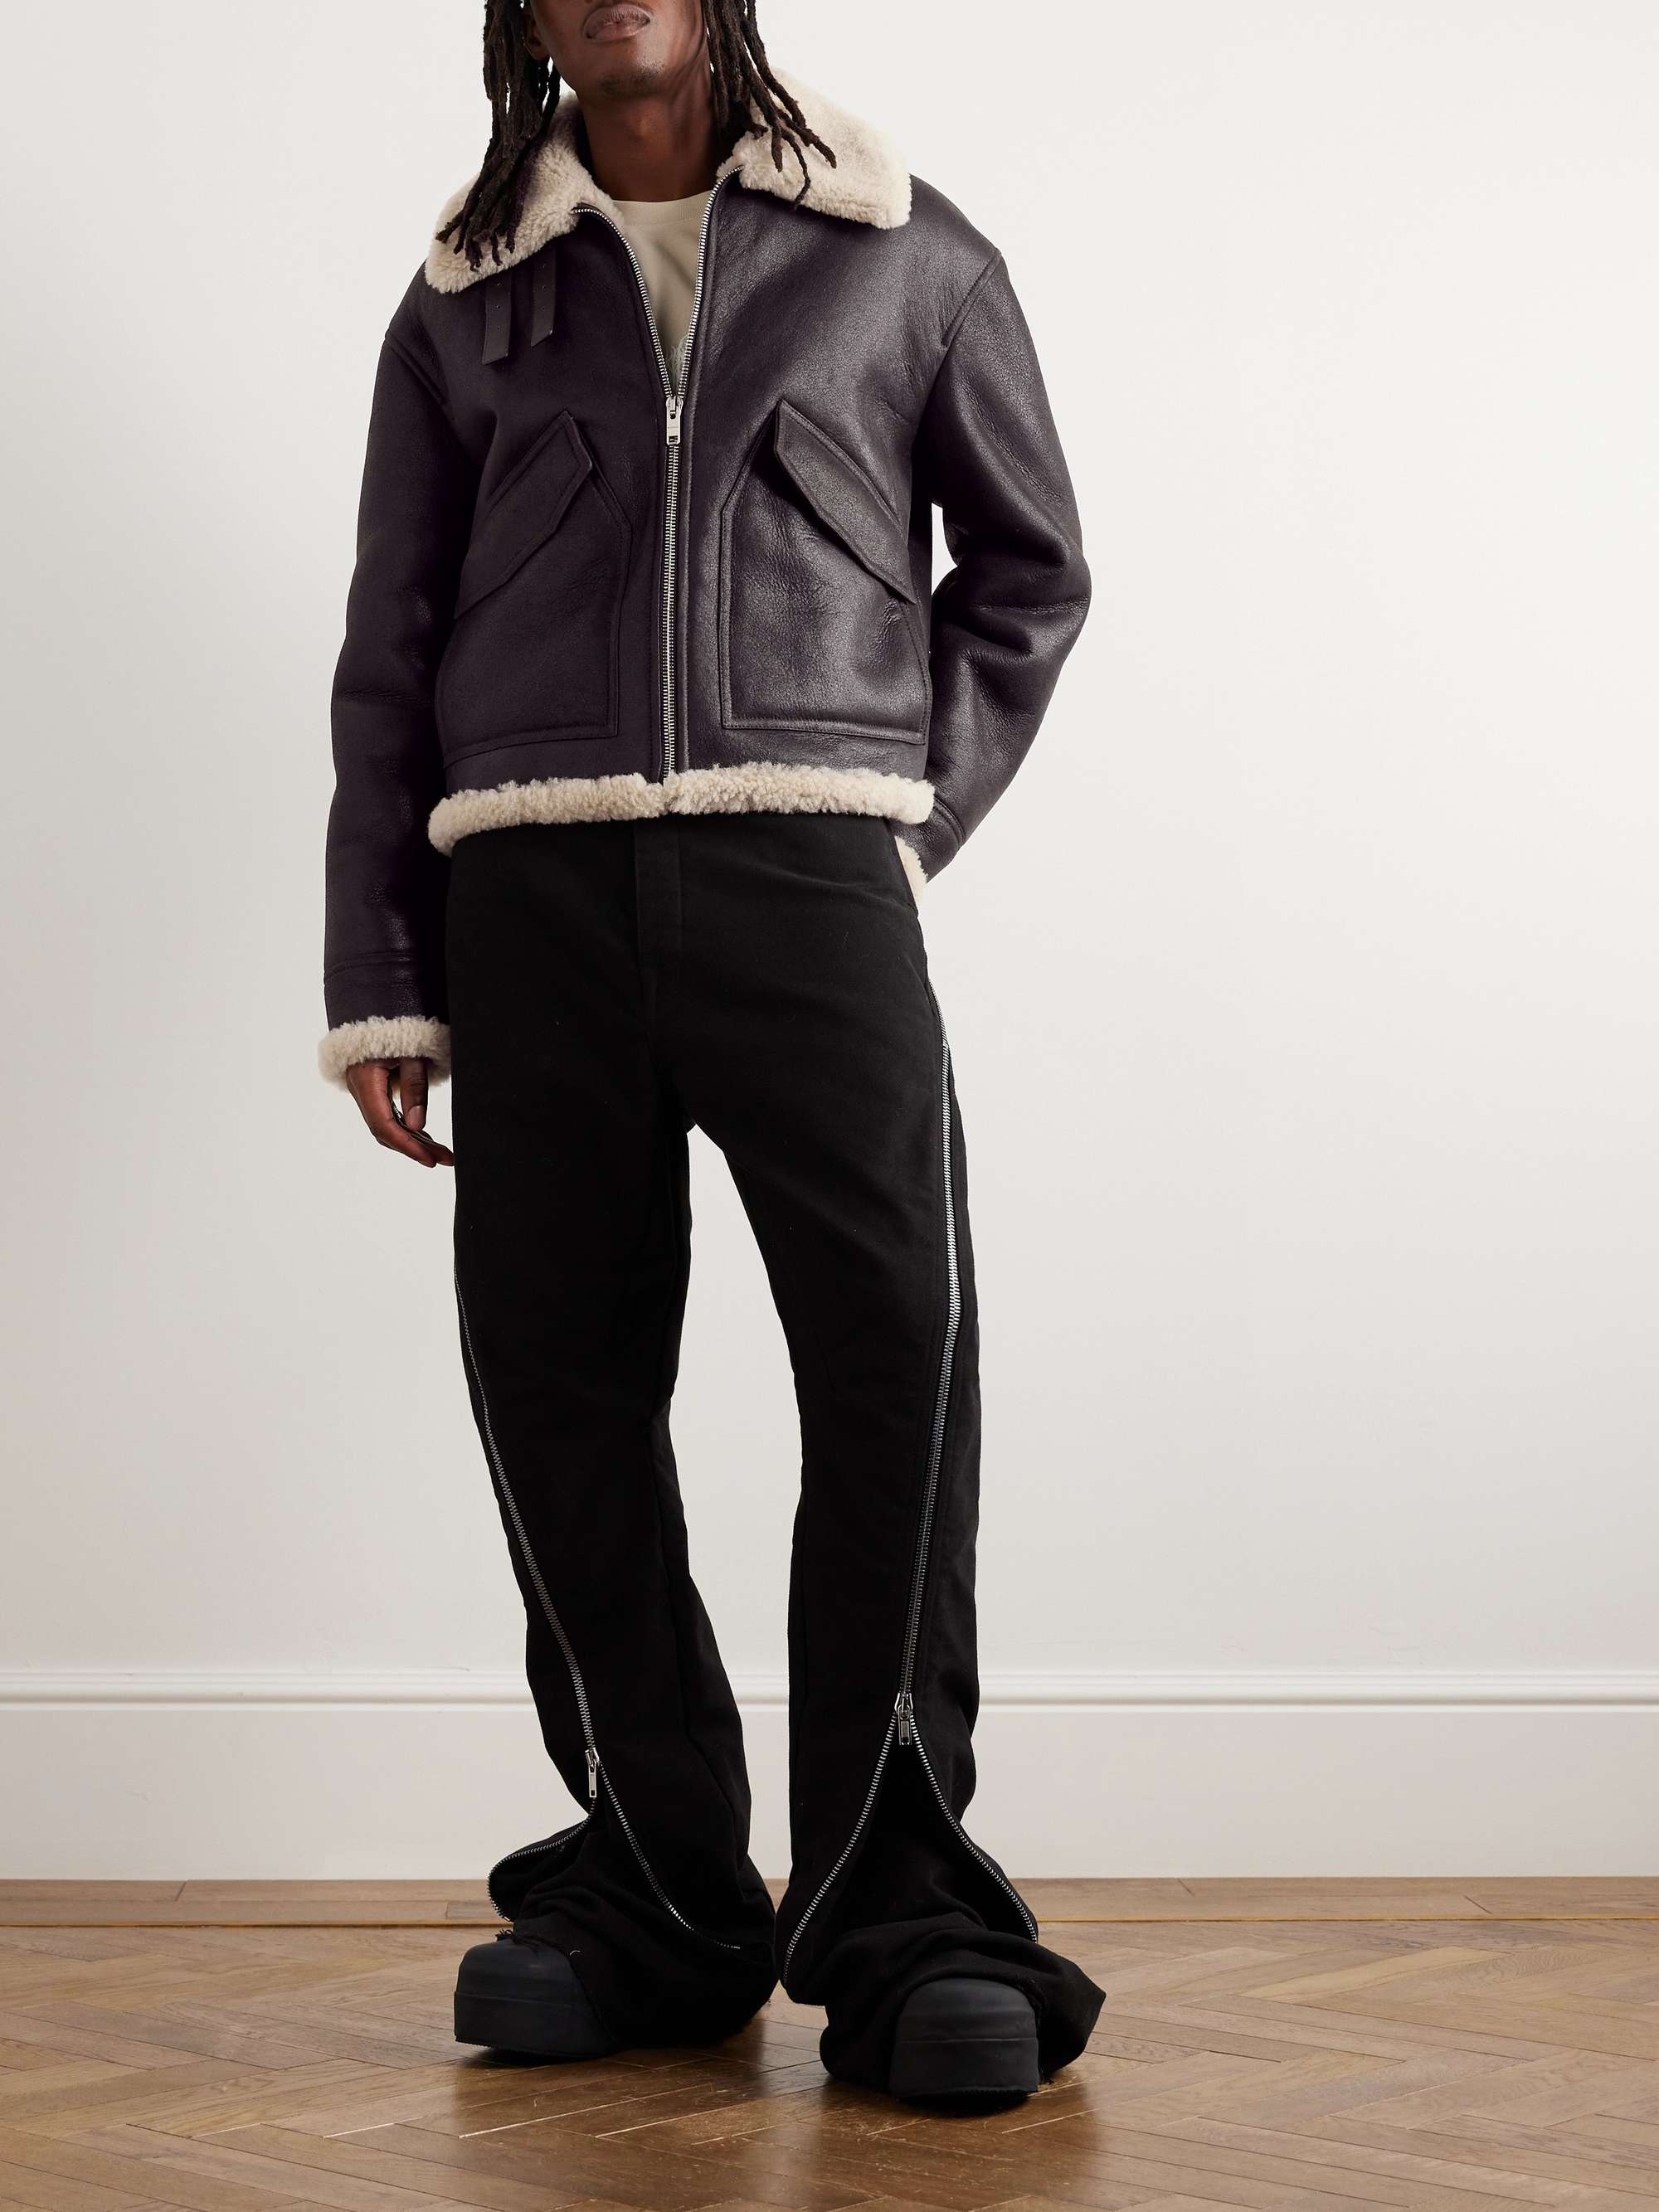 GIVENCHY Shearling-Lined Leather Jacket for Men | MR PORTER